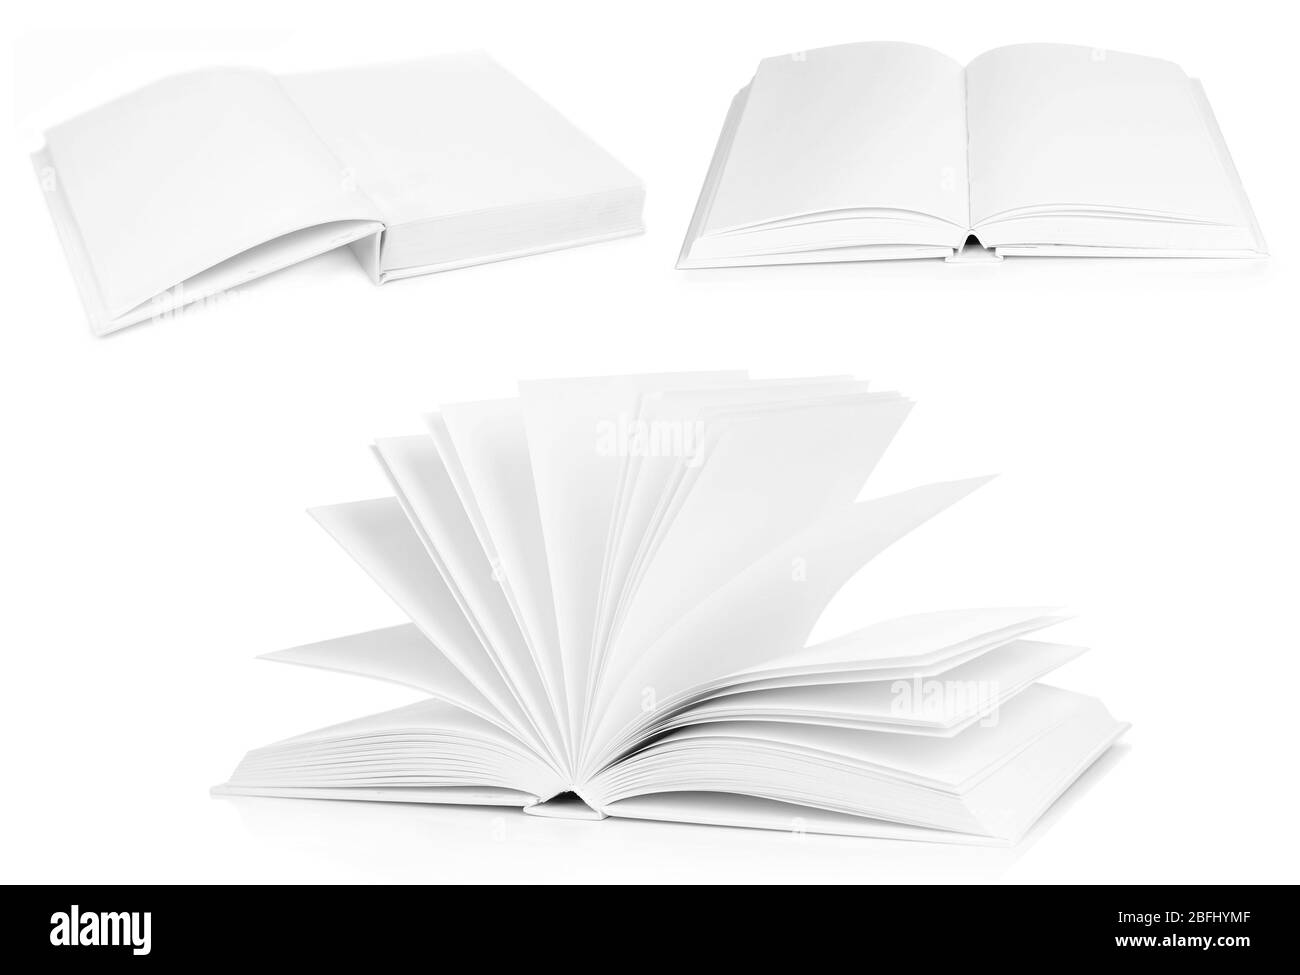 Collage of white empty books Stock Photo